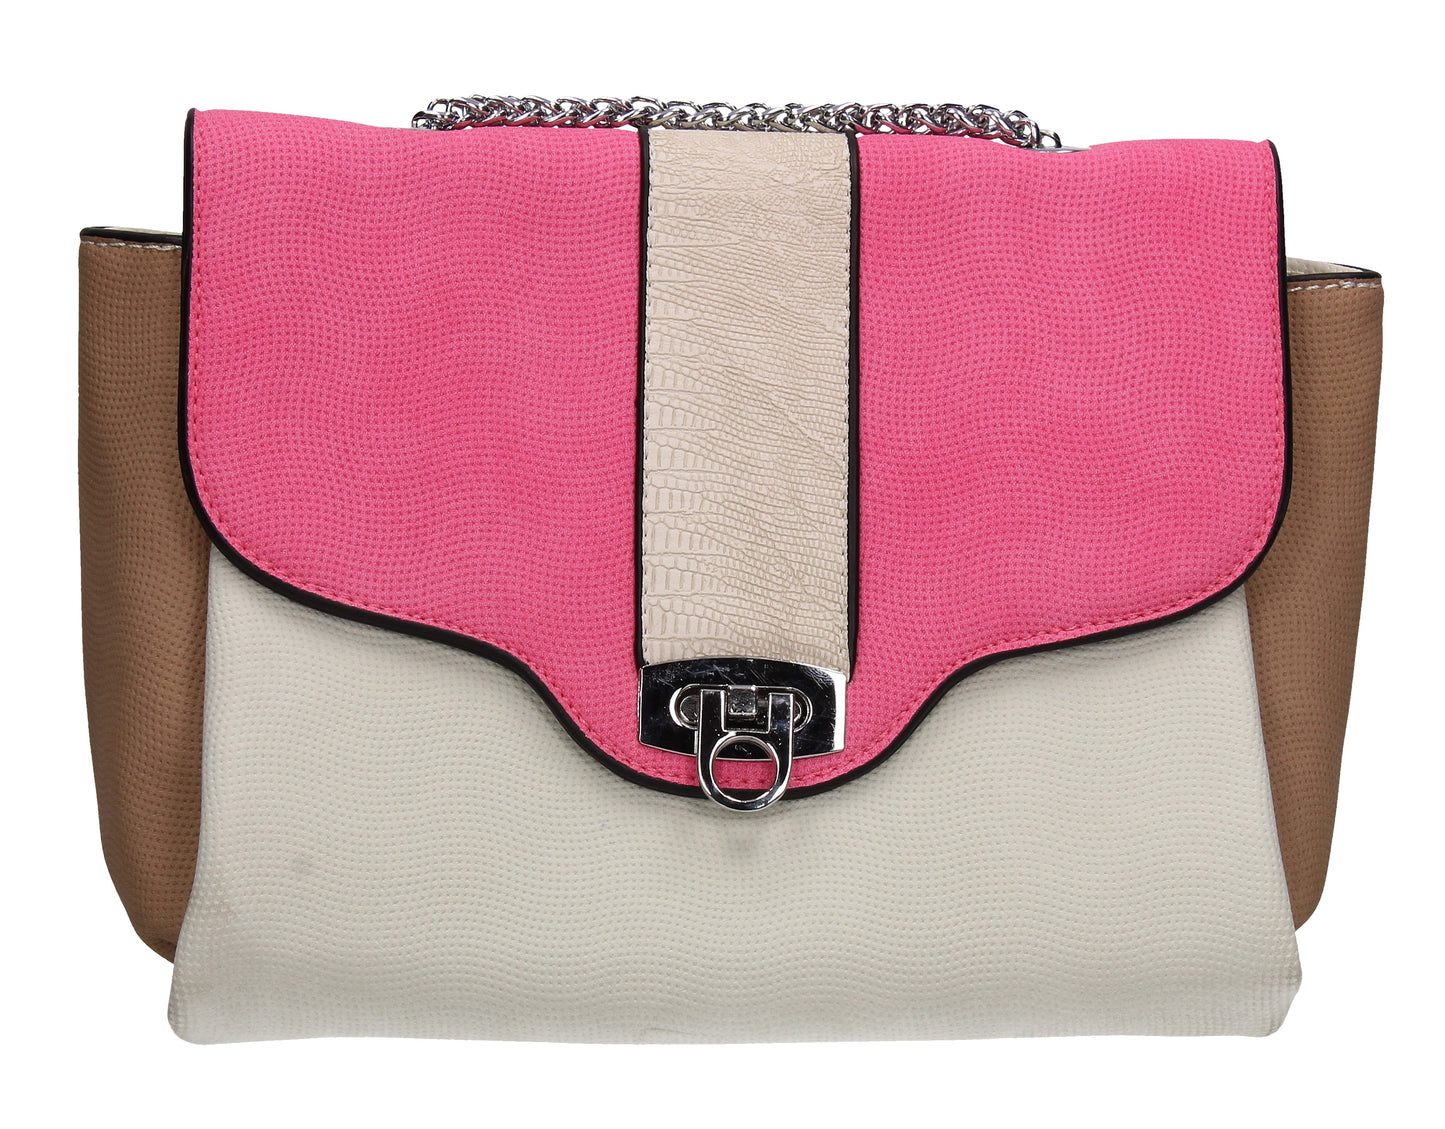 Sears Two Tone Handbag PearlBeautiful Cute Animal Faux Leather Clutch Bag Handles Strap Summer School